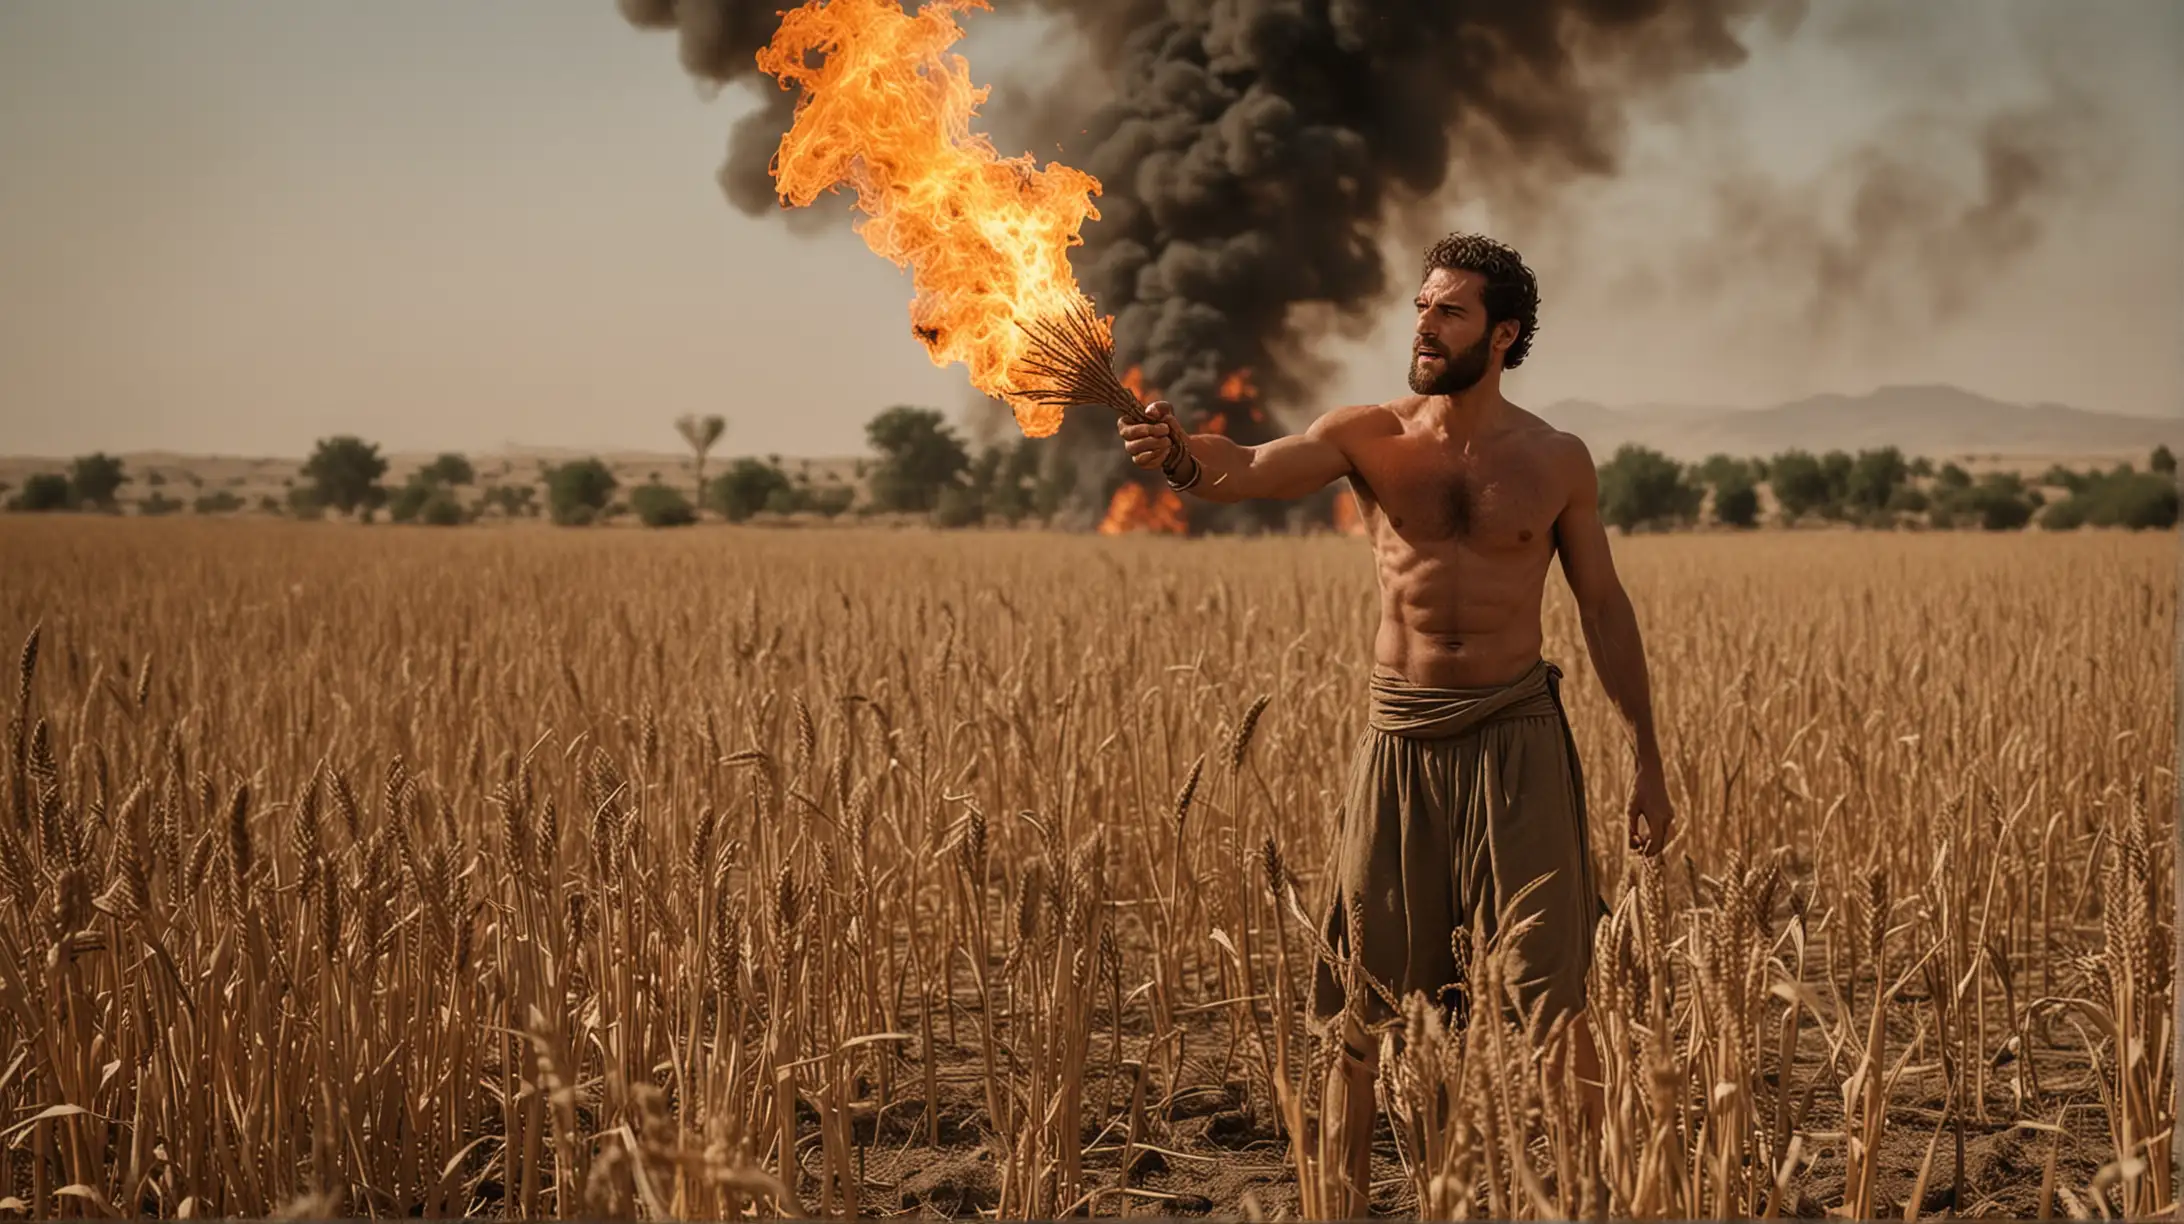 Biblical Era Man Setting Fire to Crops in Middle Eastern Field